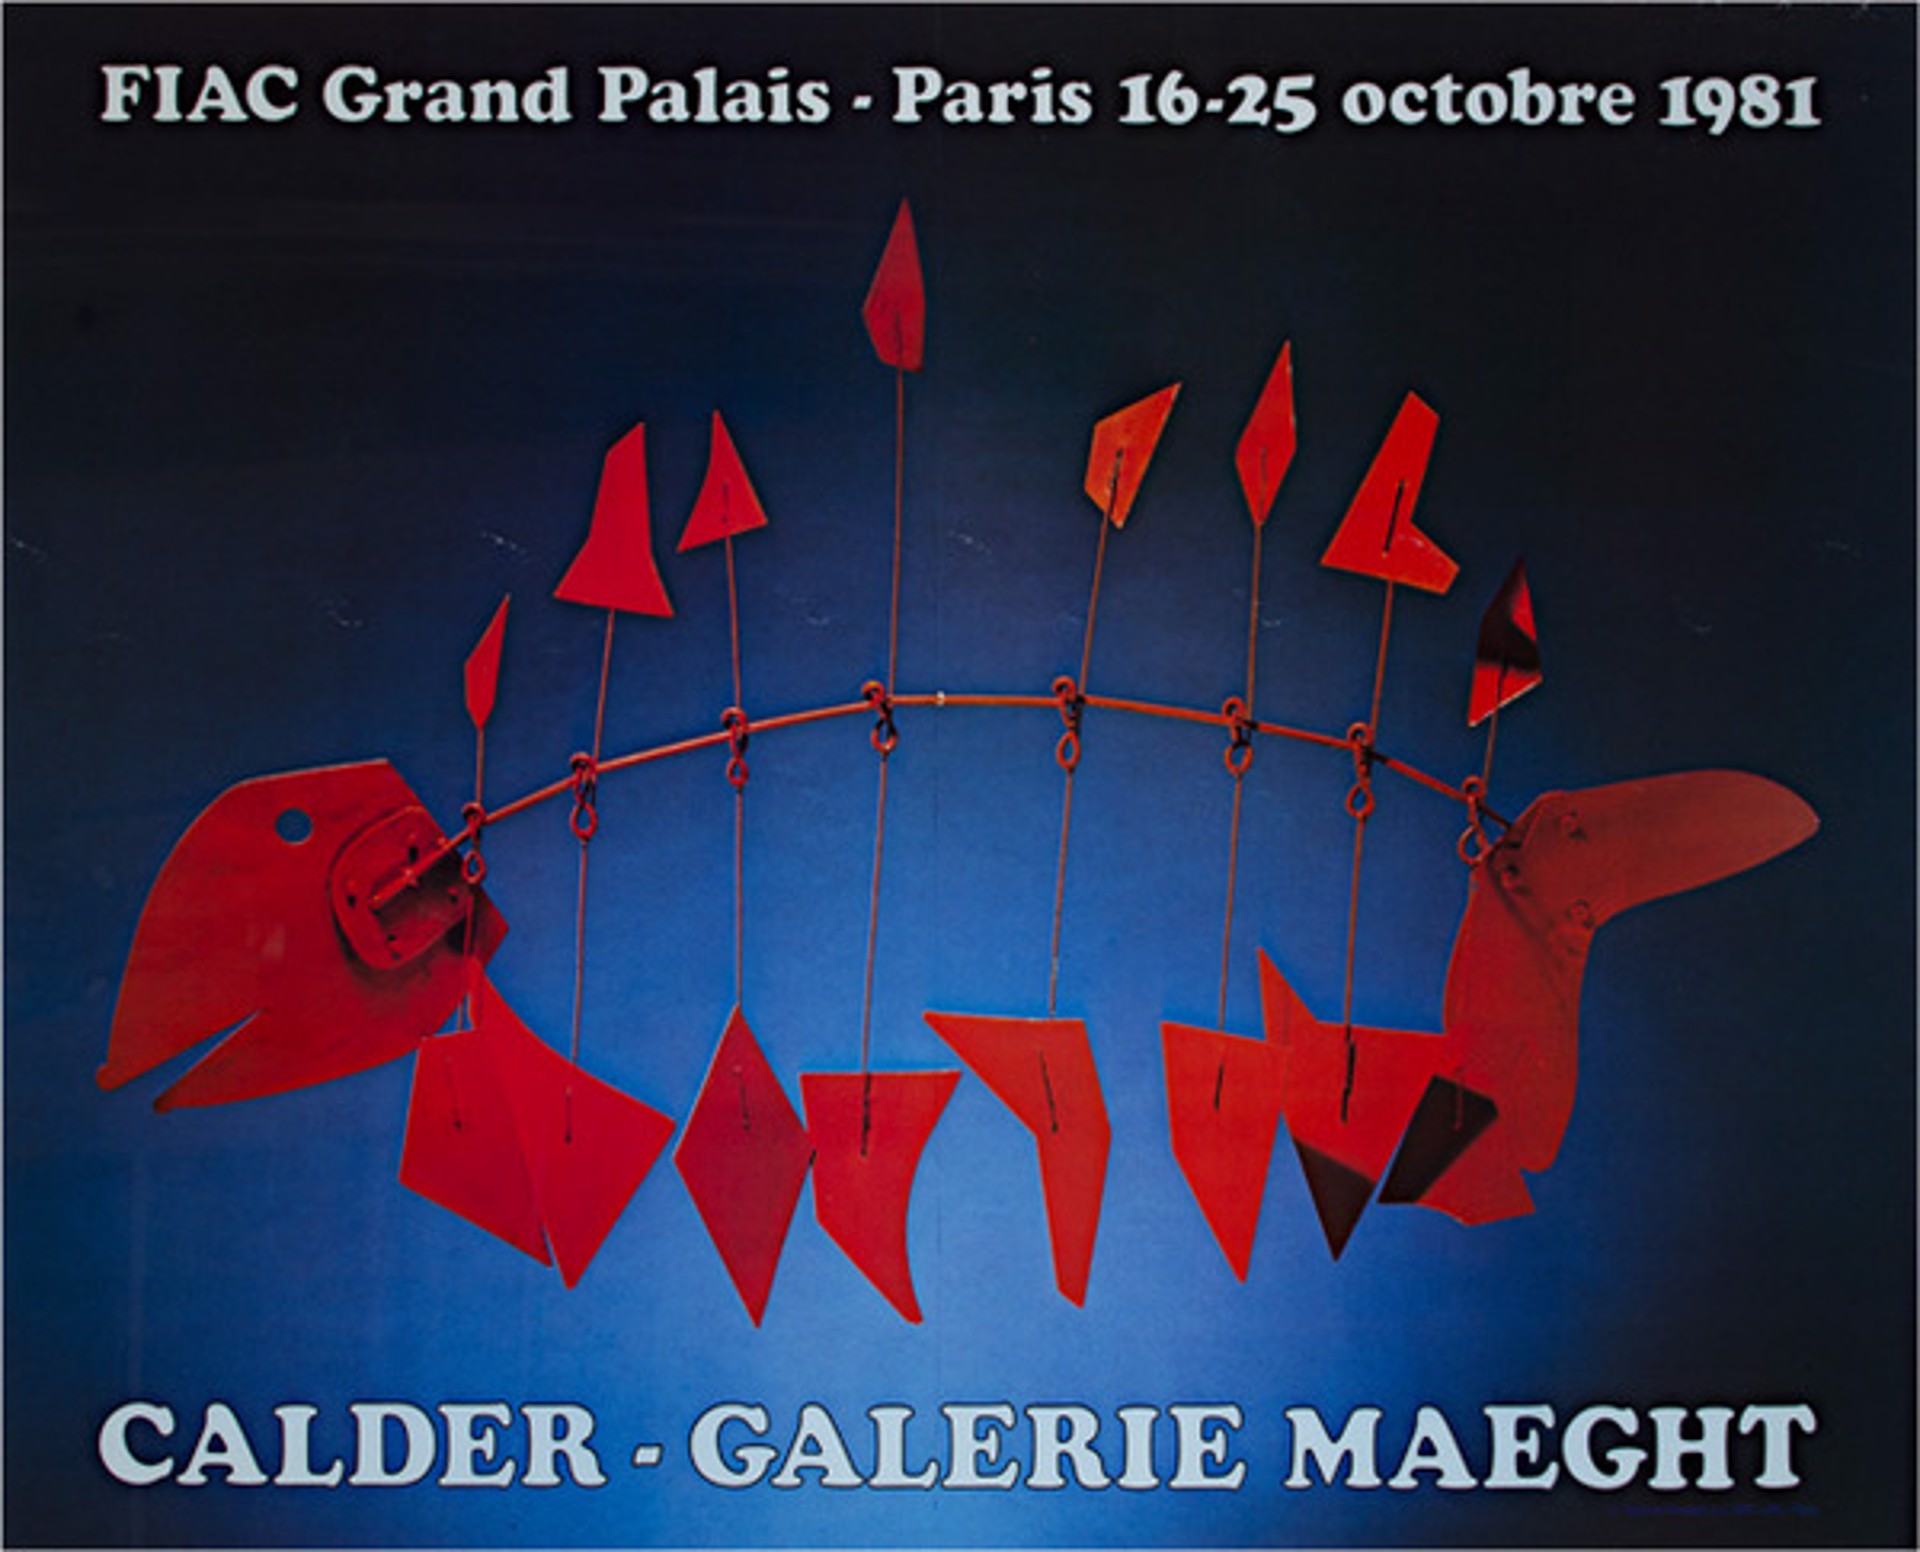 FIAC Grand Palais - Paris Calder-Galerie Maeght by Alexander Calder